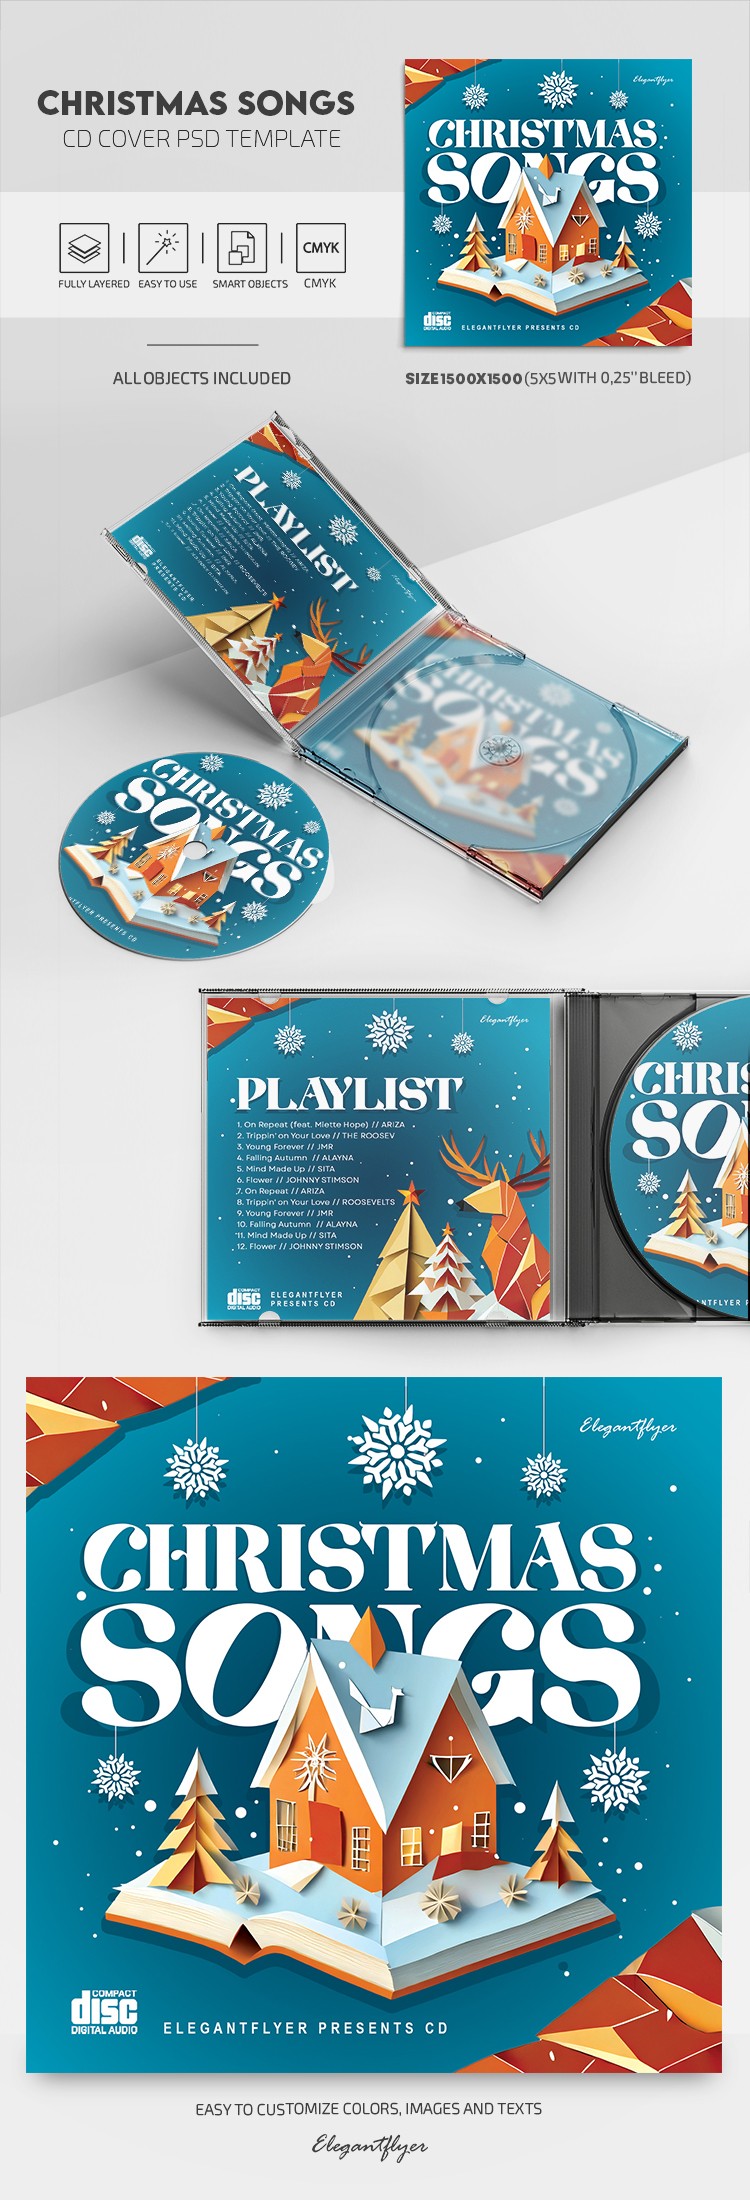 Christmas Songs by ElegantFlyer